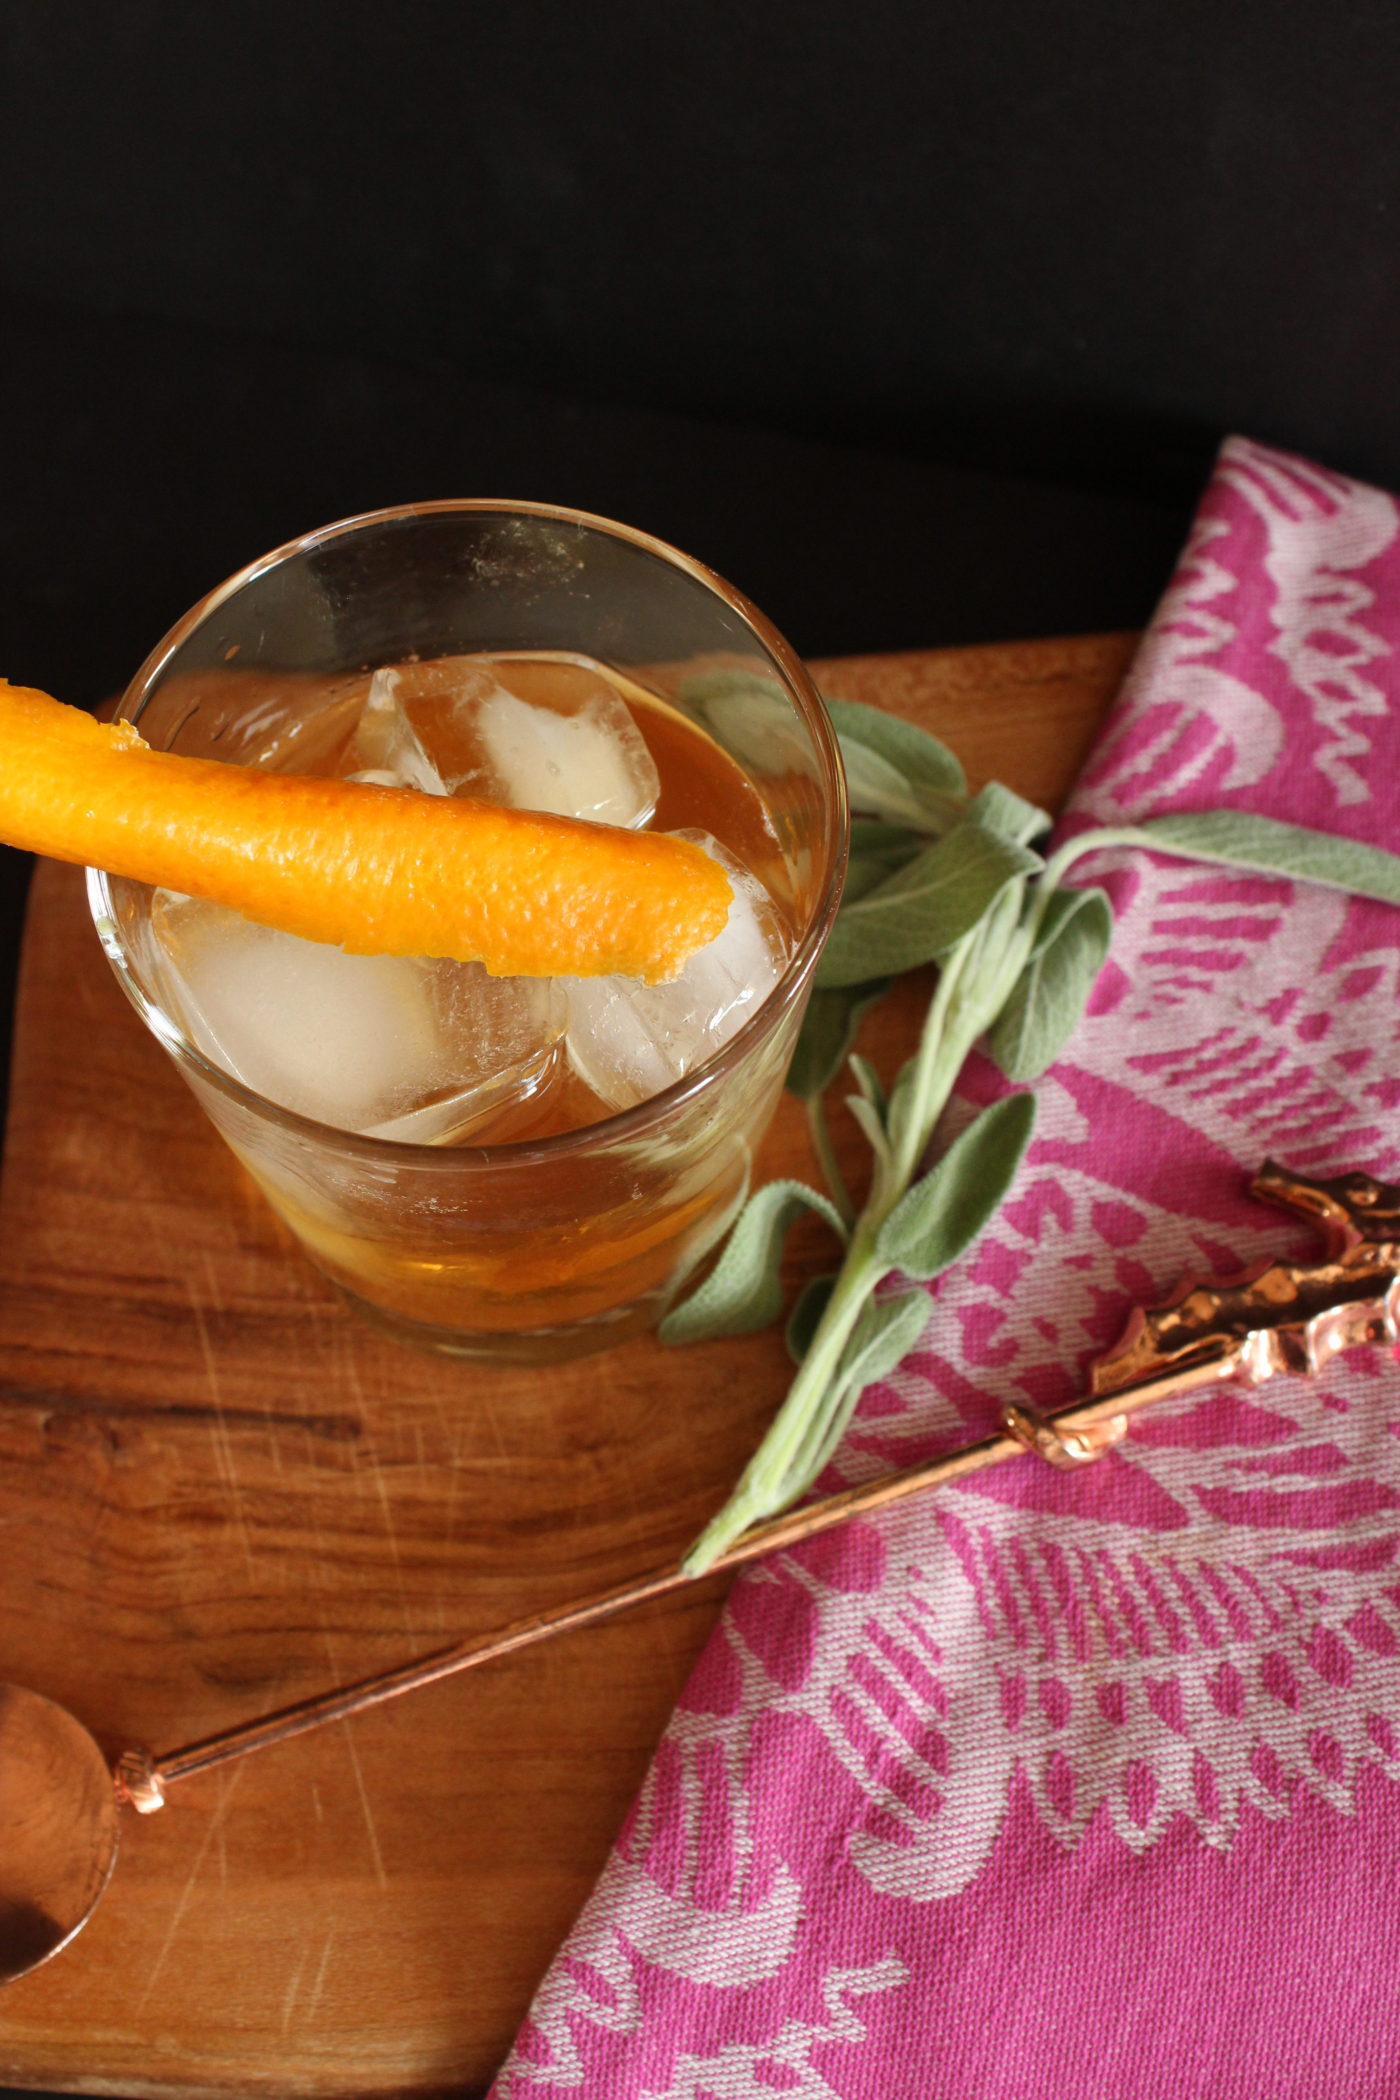 bourbon in glass with orange peel